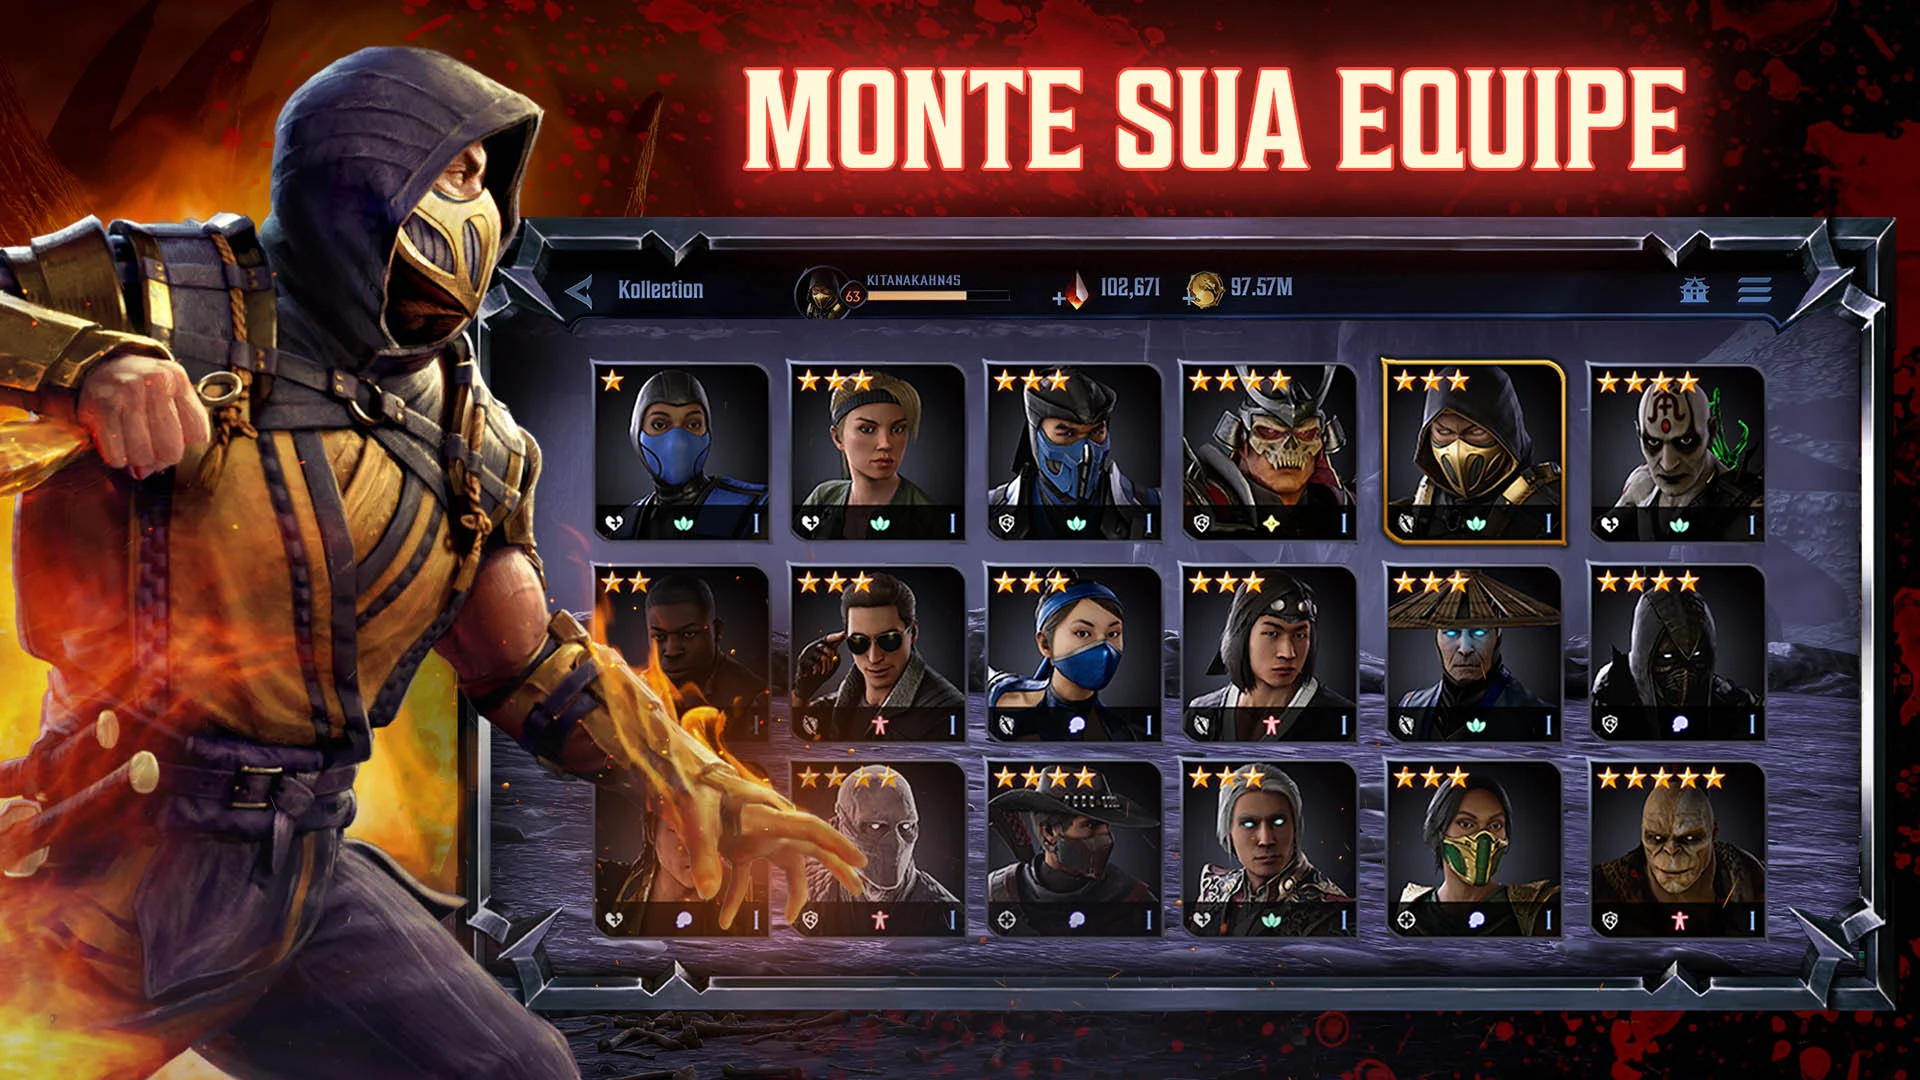 Mortal Kombat 1: Requisitos de sistema para jogar no PC